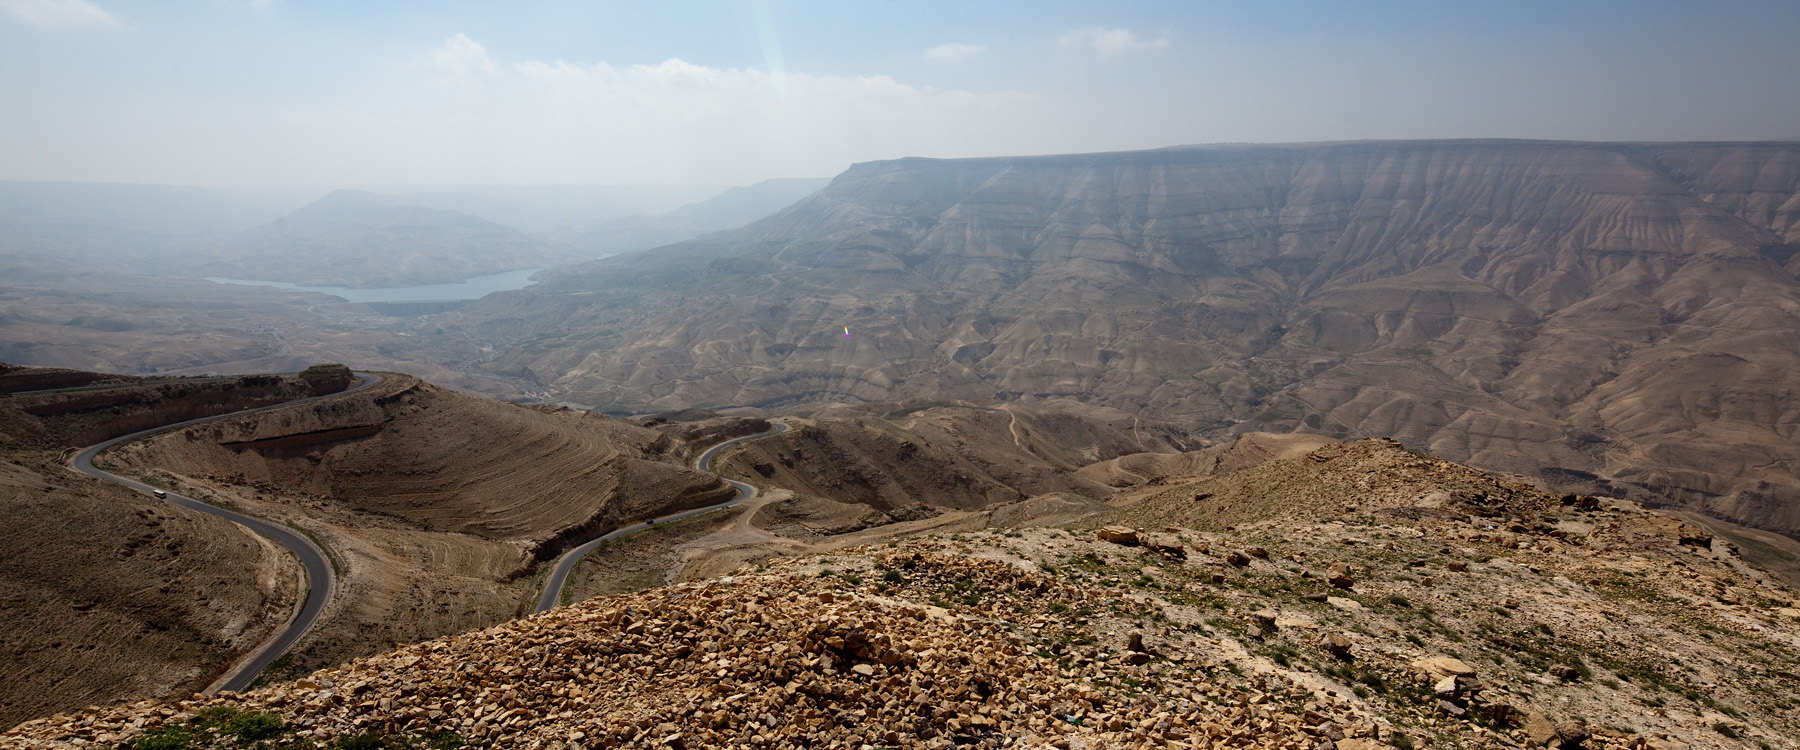 Wadi Al-Mujib Gorge.